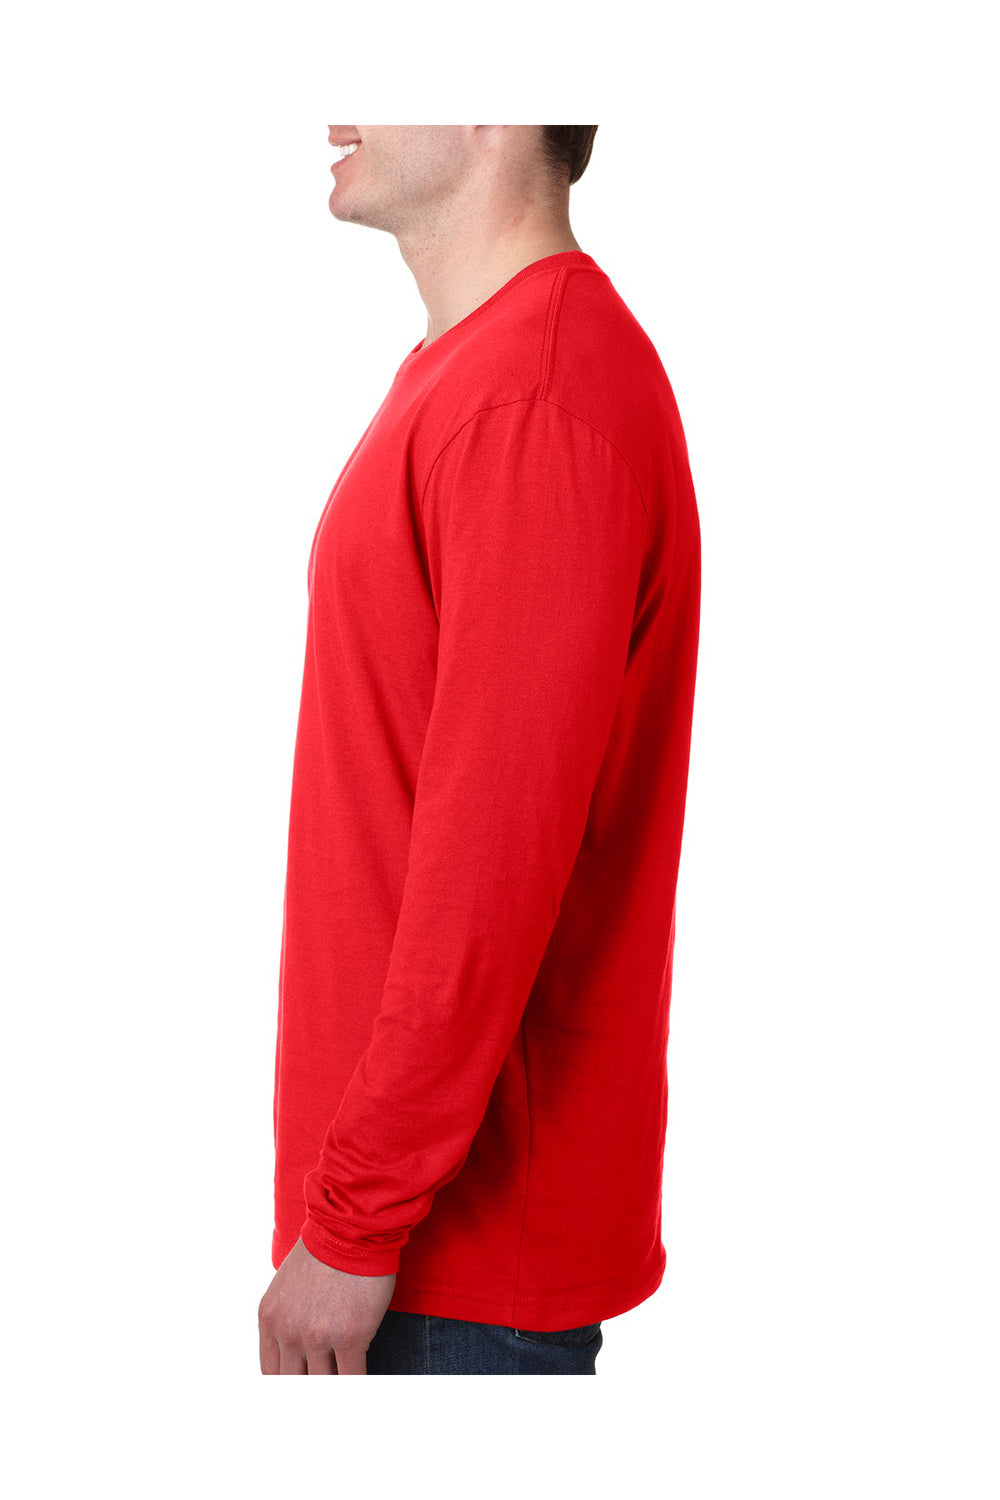 Next Level N3601 Mens Fine Jersey Long Sleeve Crewneck T-Shirt Red Side